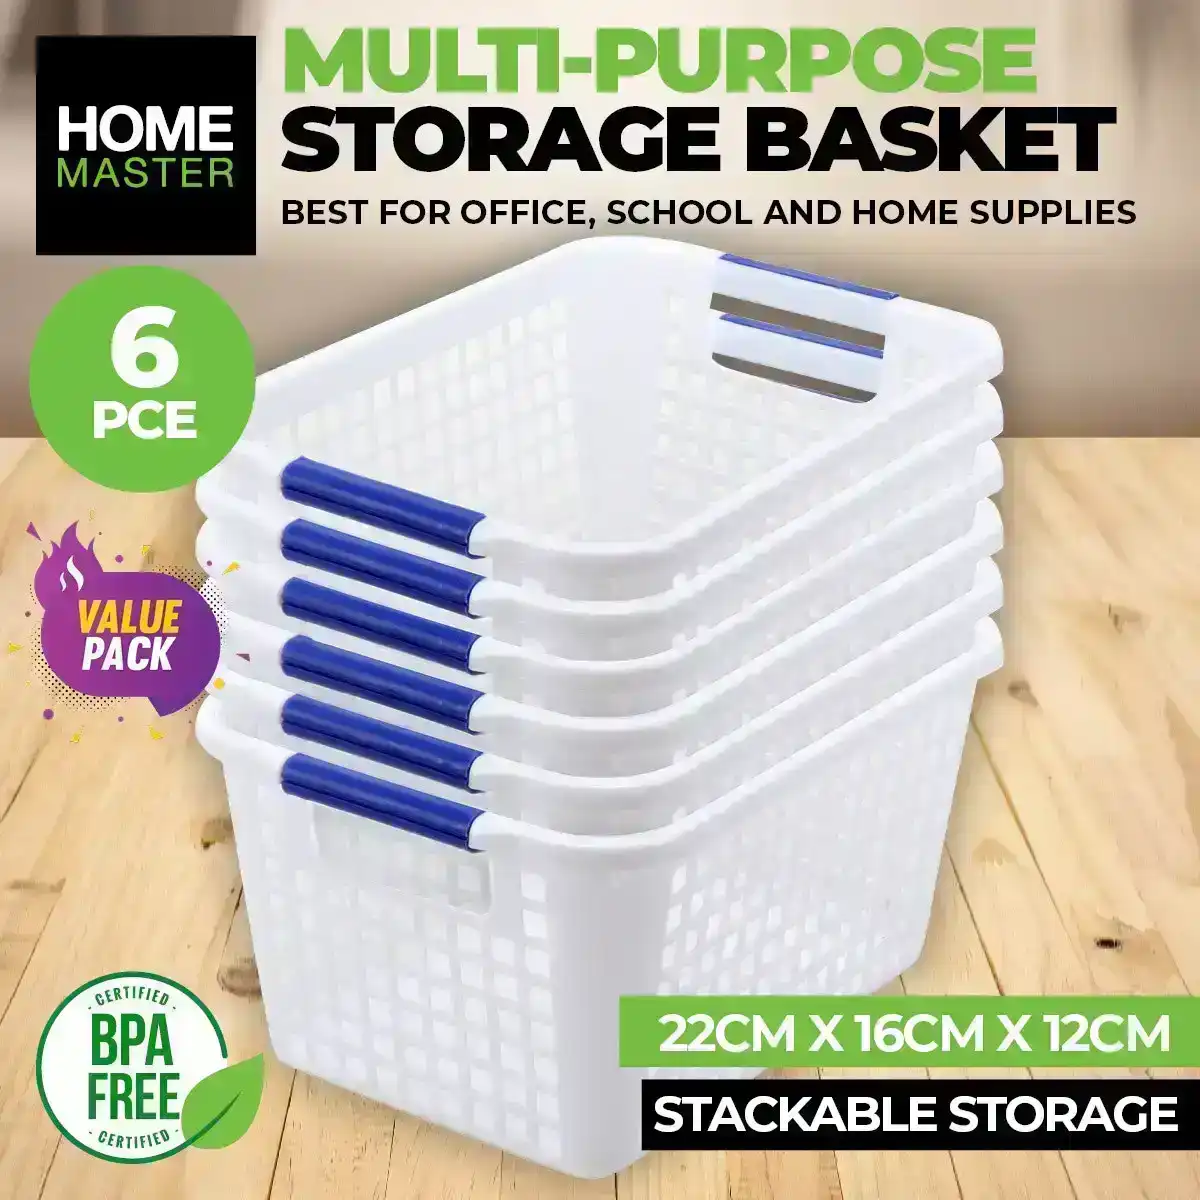 Home Master® 6PCE Storage Baskets Multi Purpose Space Saving 22cm